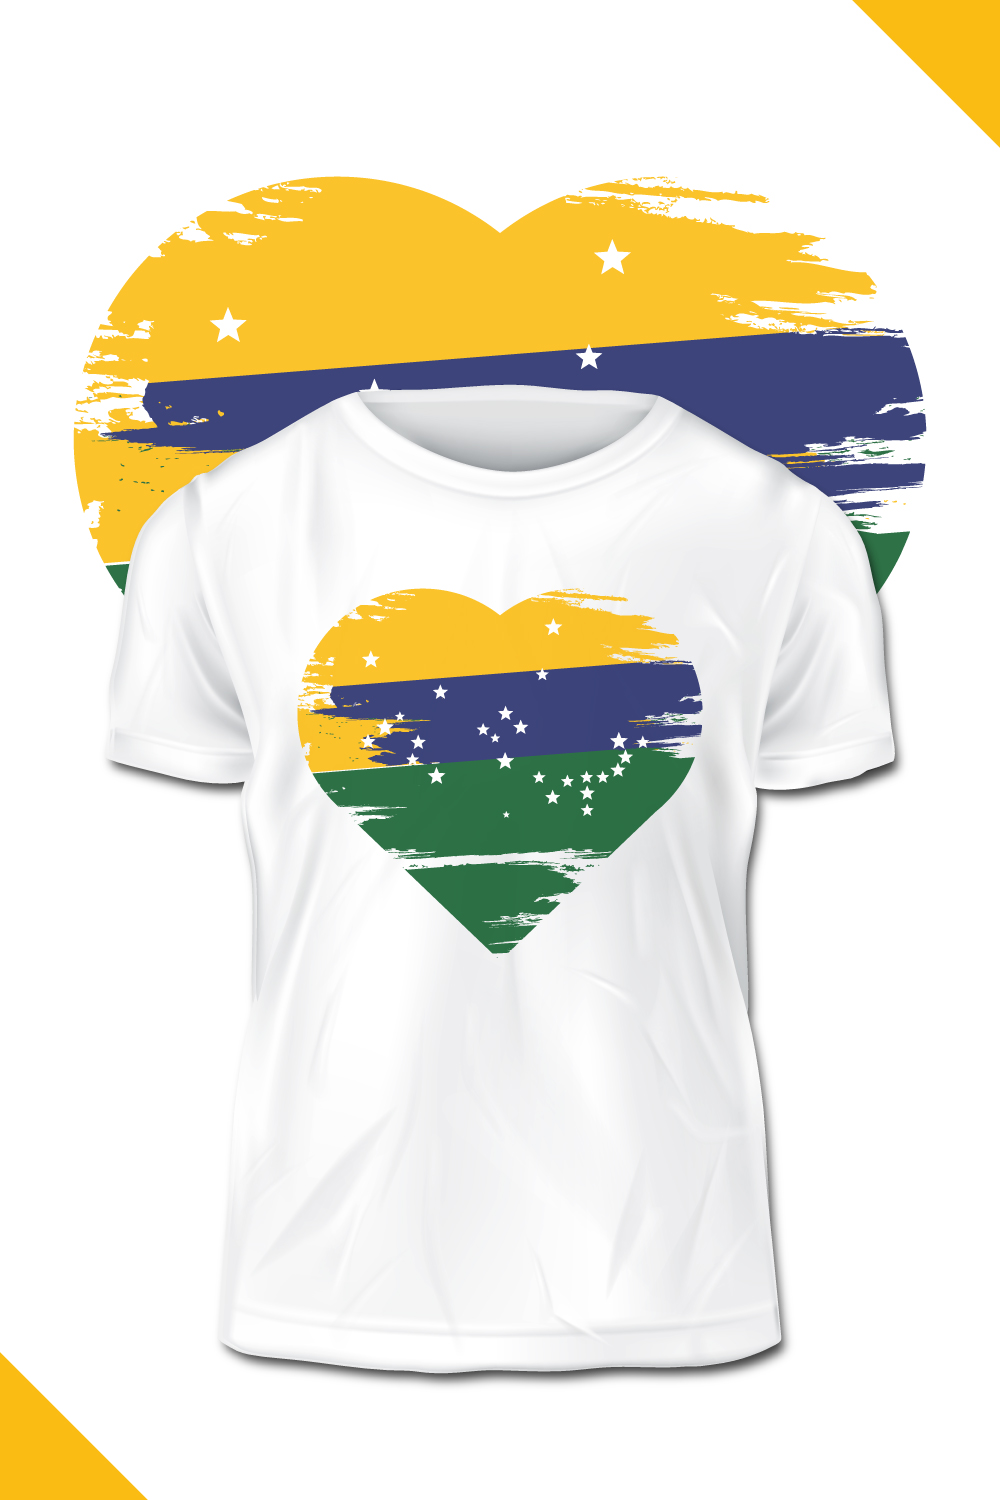 Brazil t-shirt Design pinterest preview image.